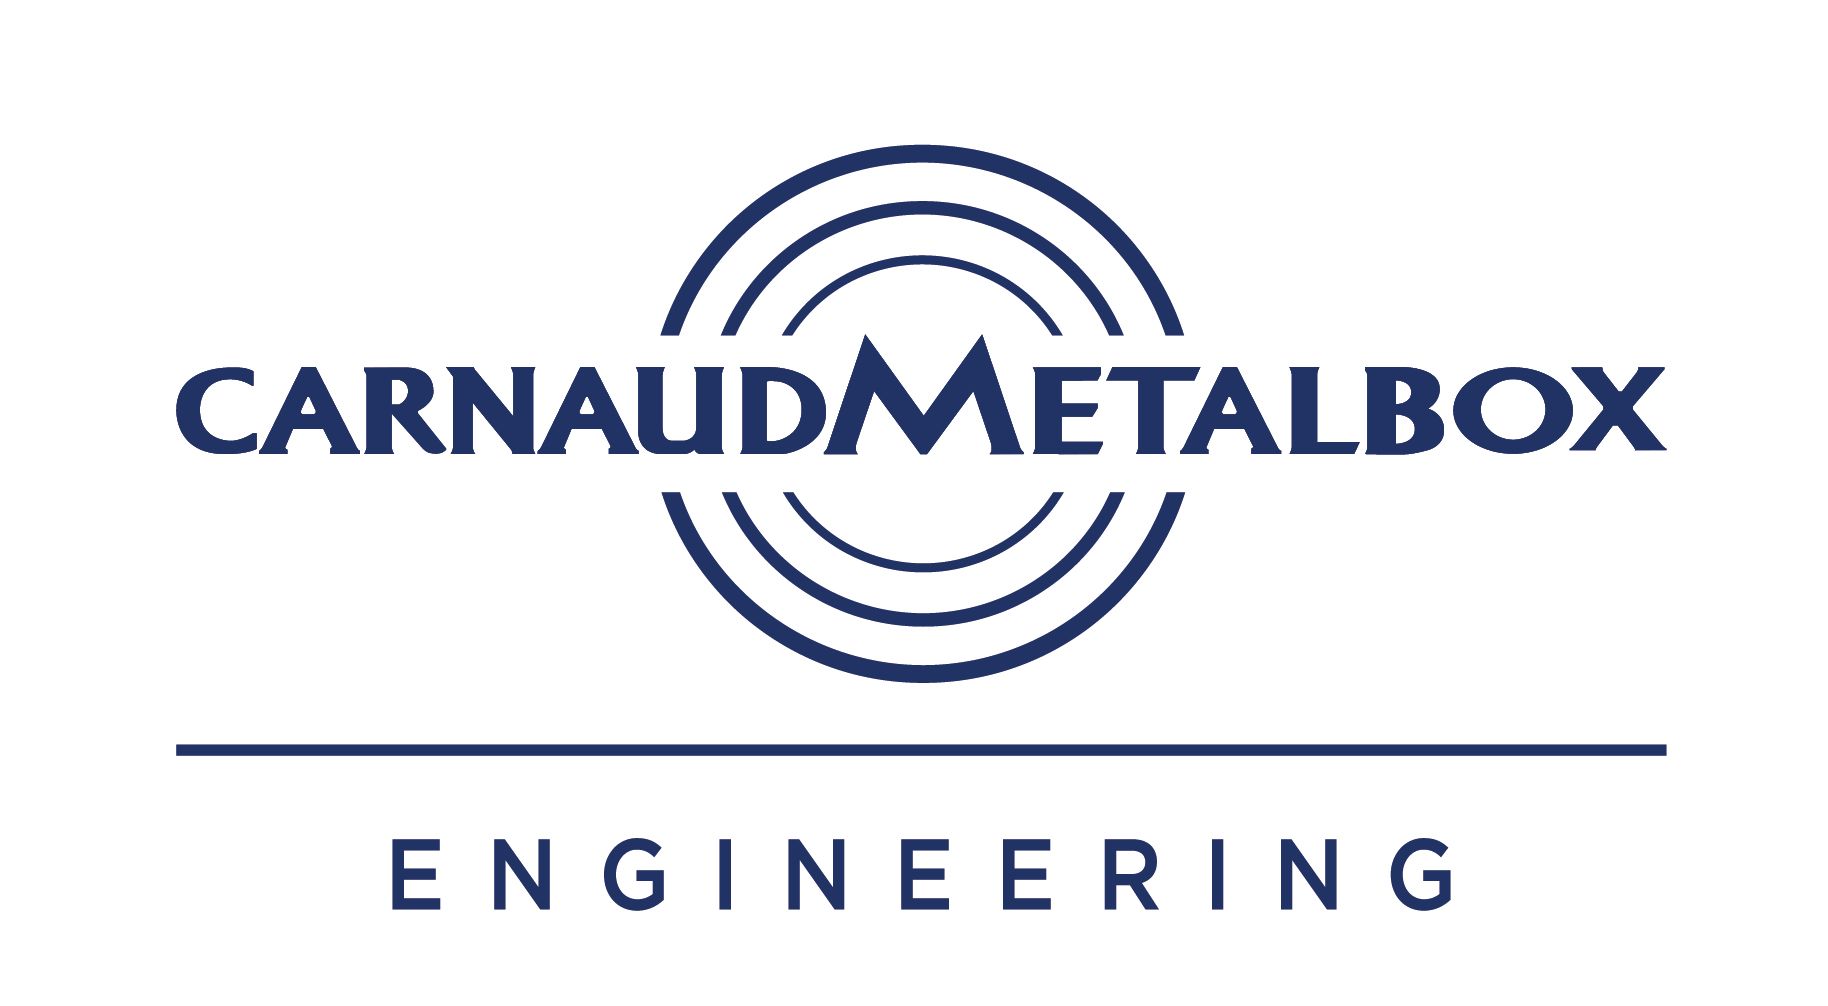 Carnaud Metalbox Engineering